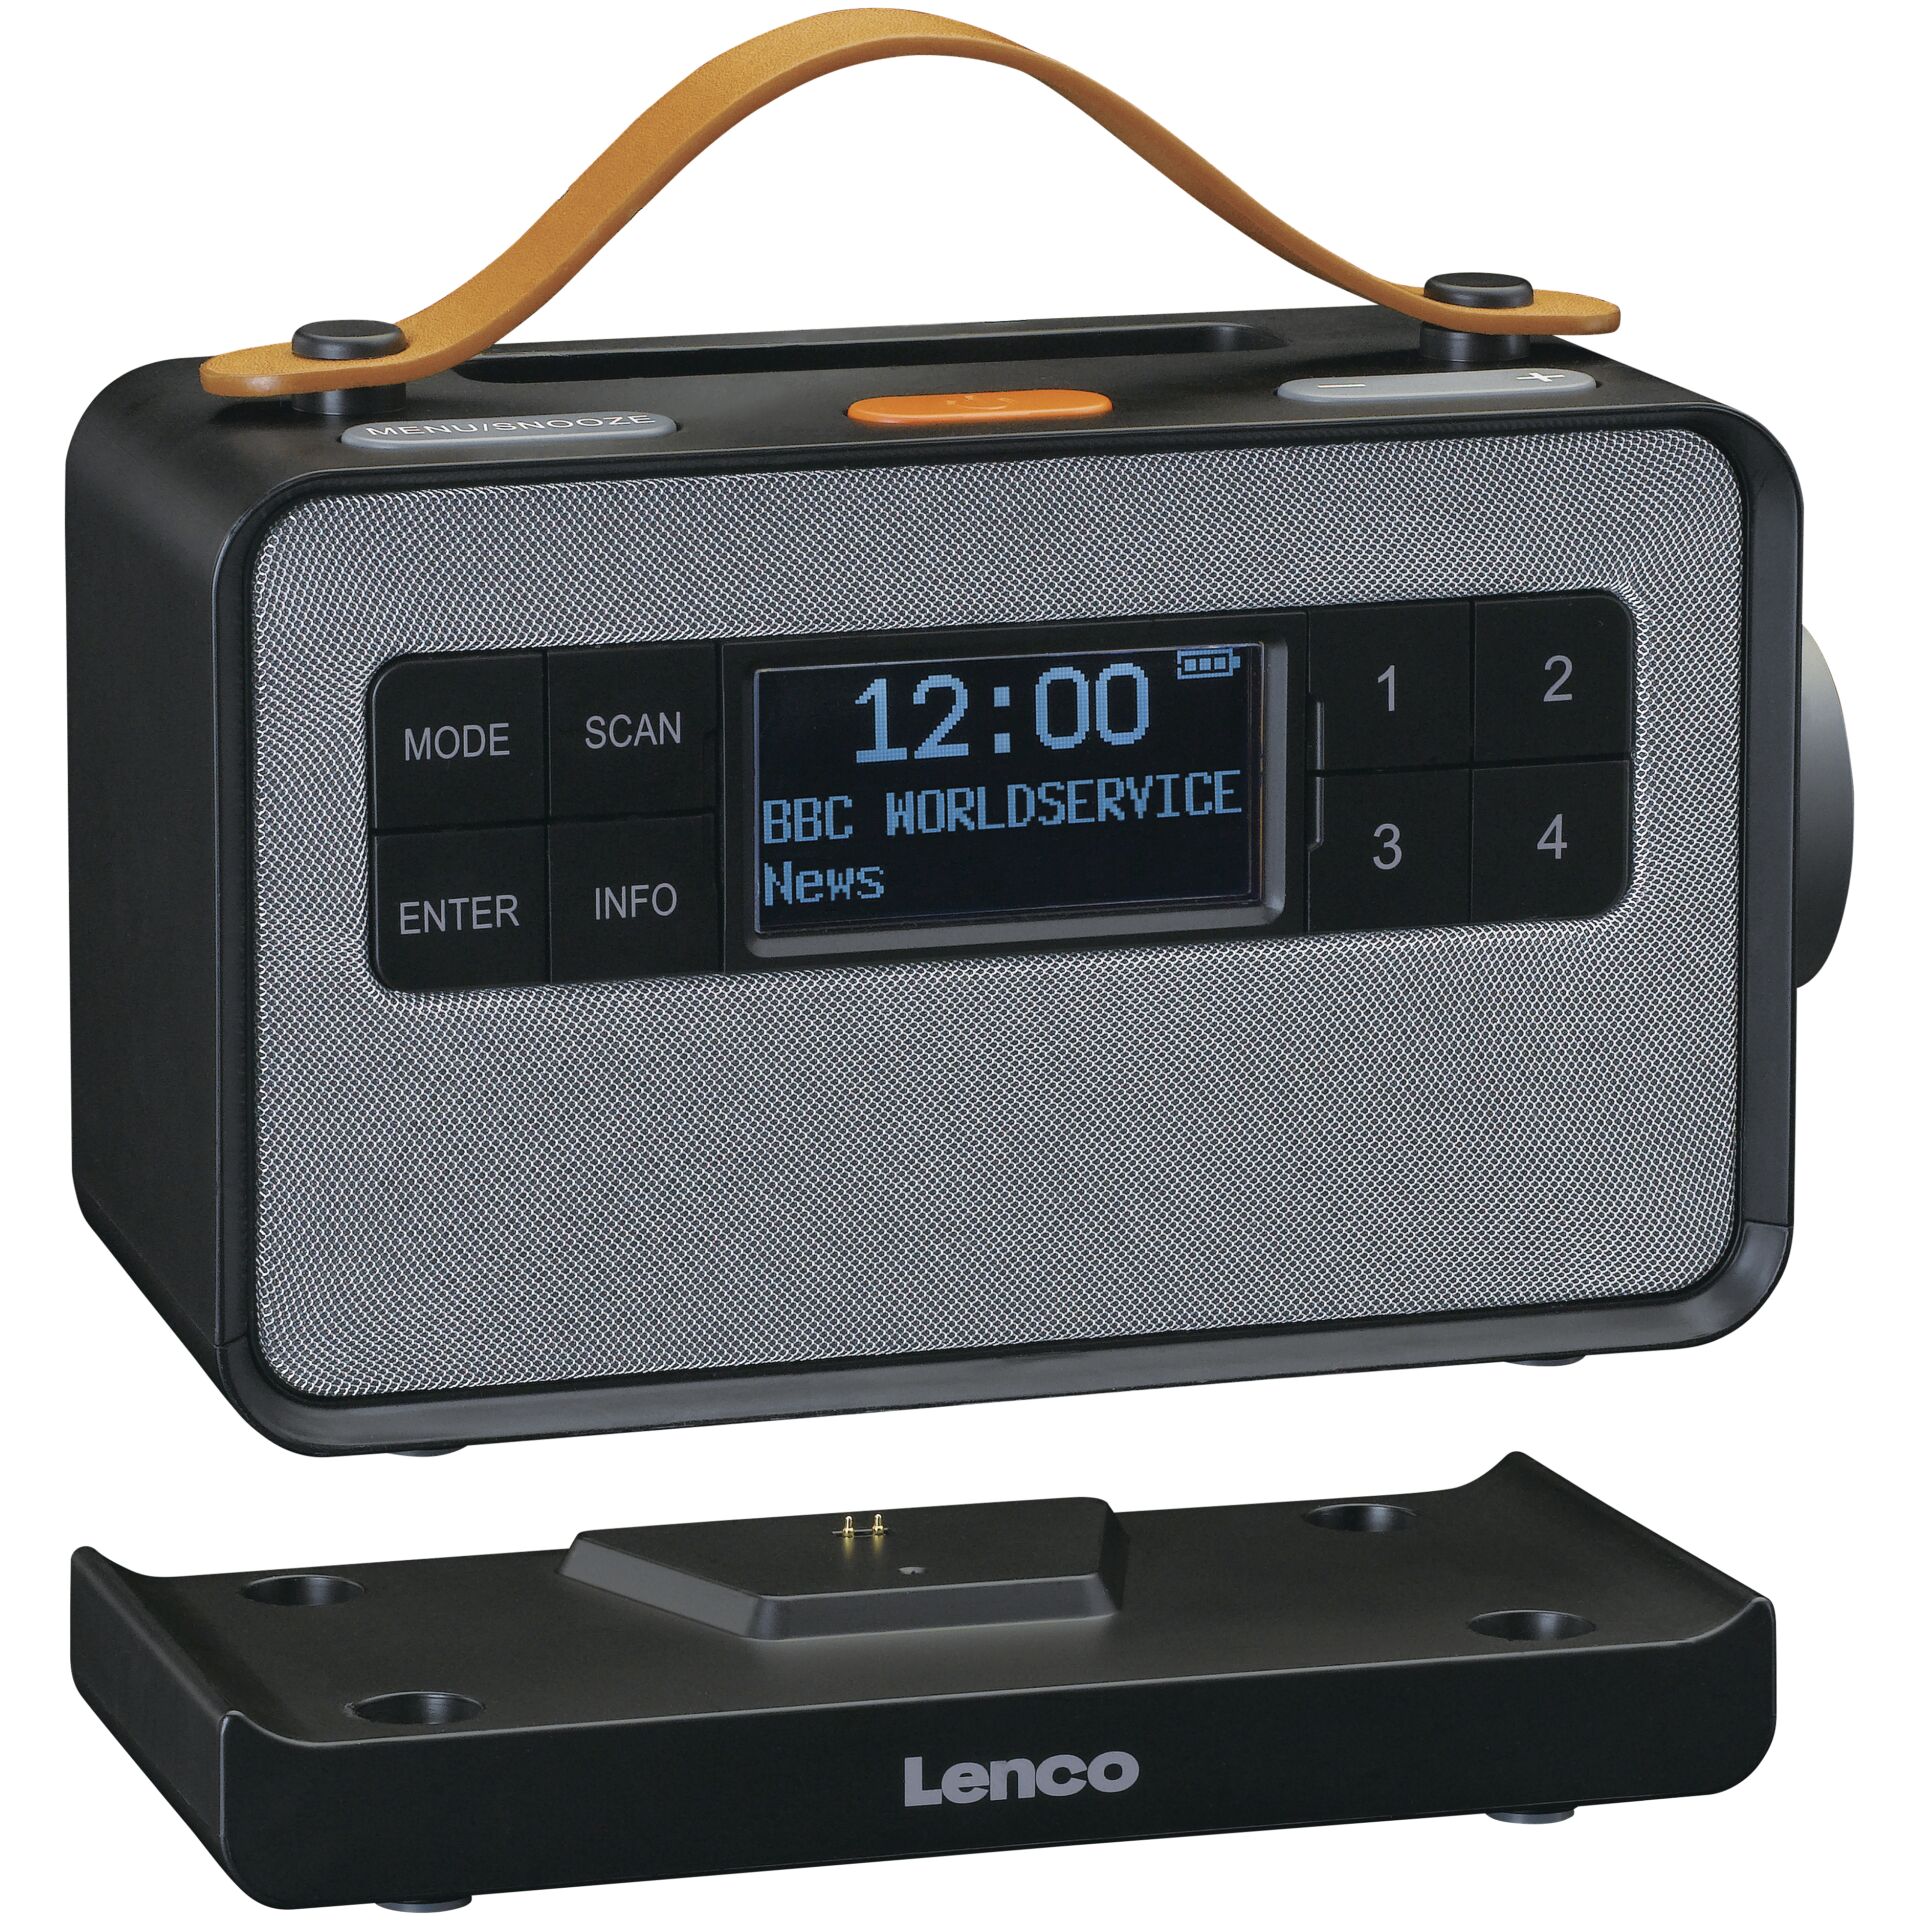 Lenco -PDR-065 -Lenco schwarz Hardware/Electronic (PDR-065BK)